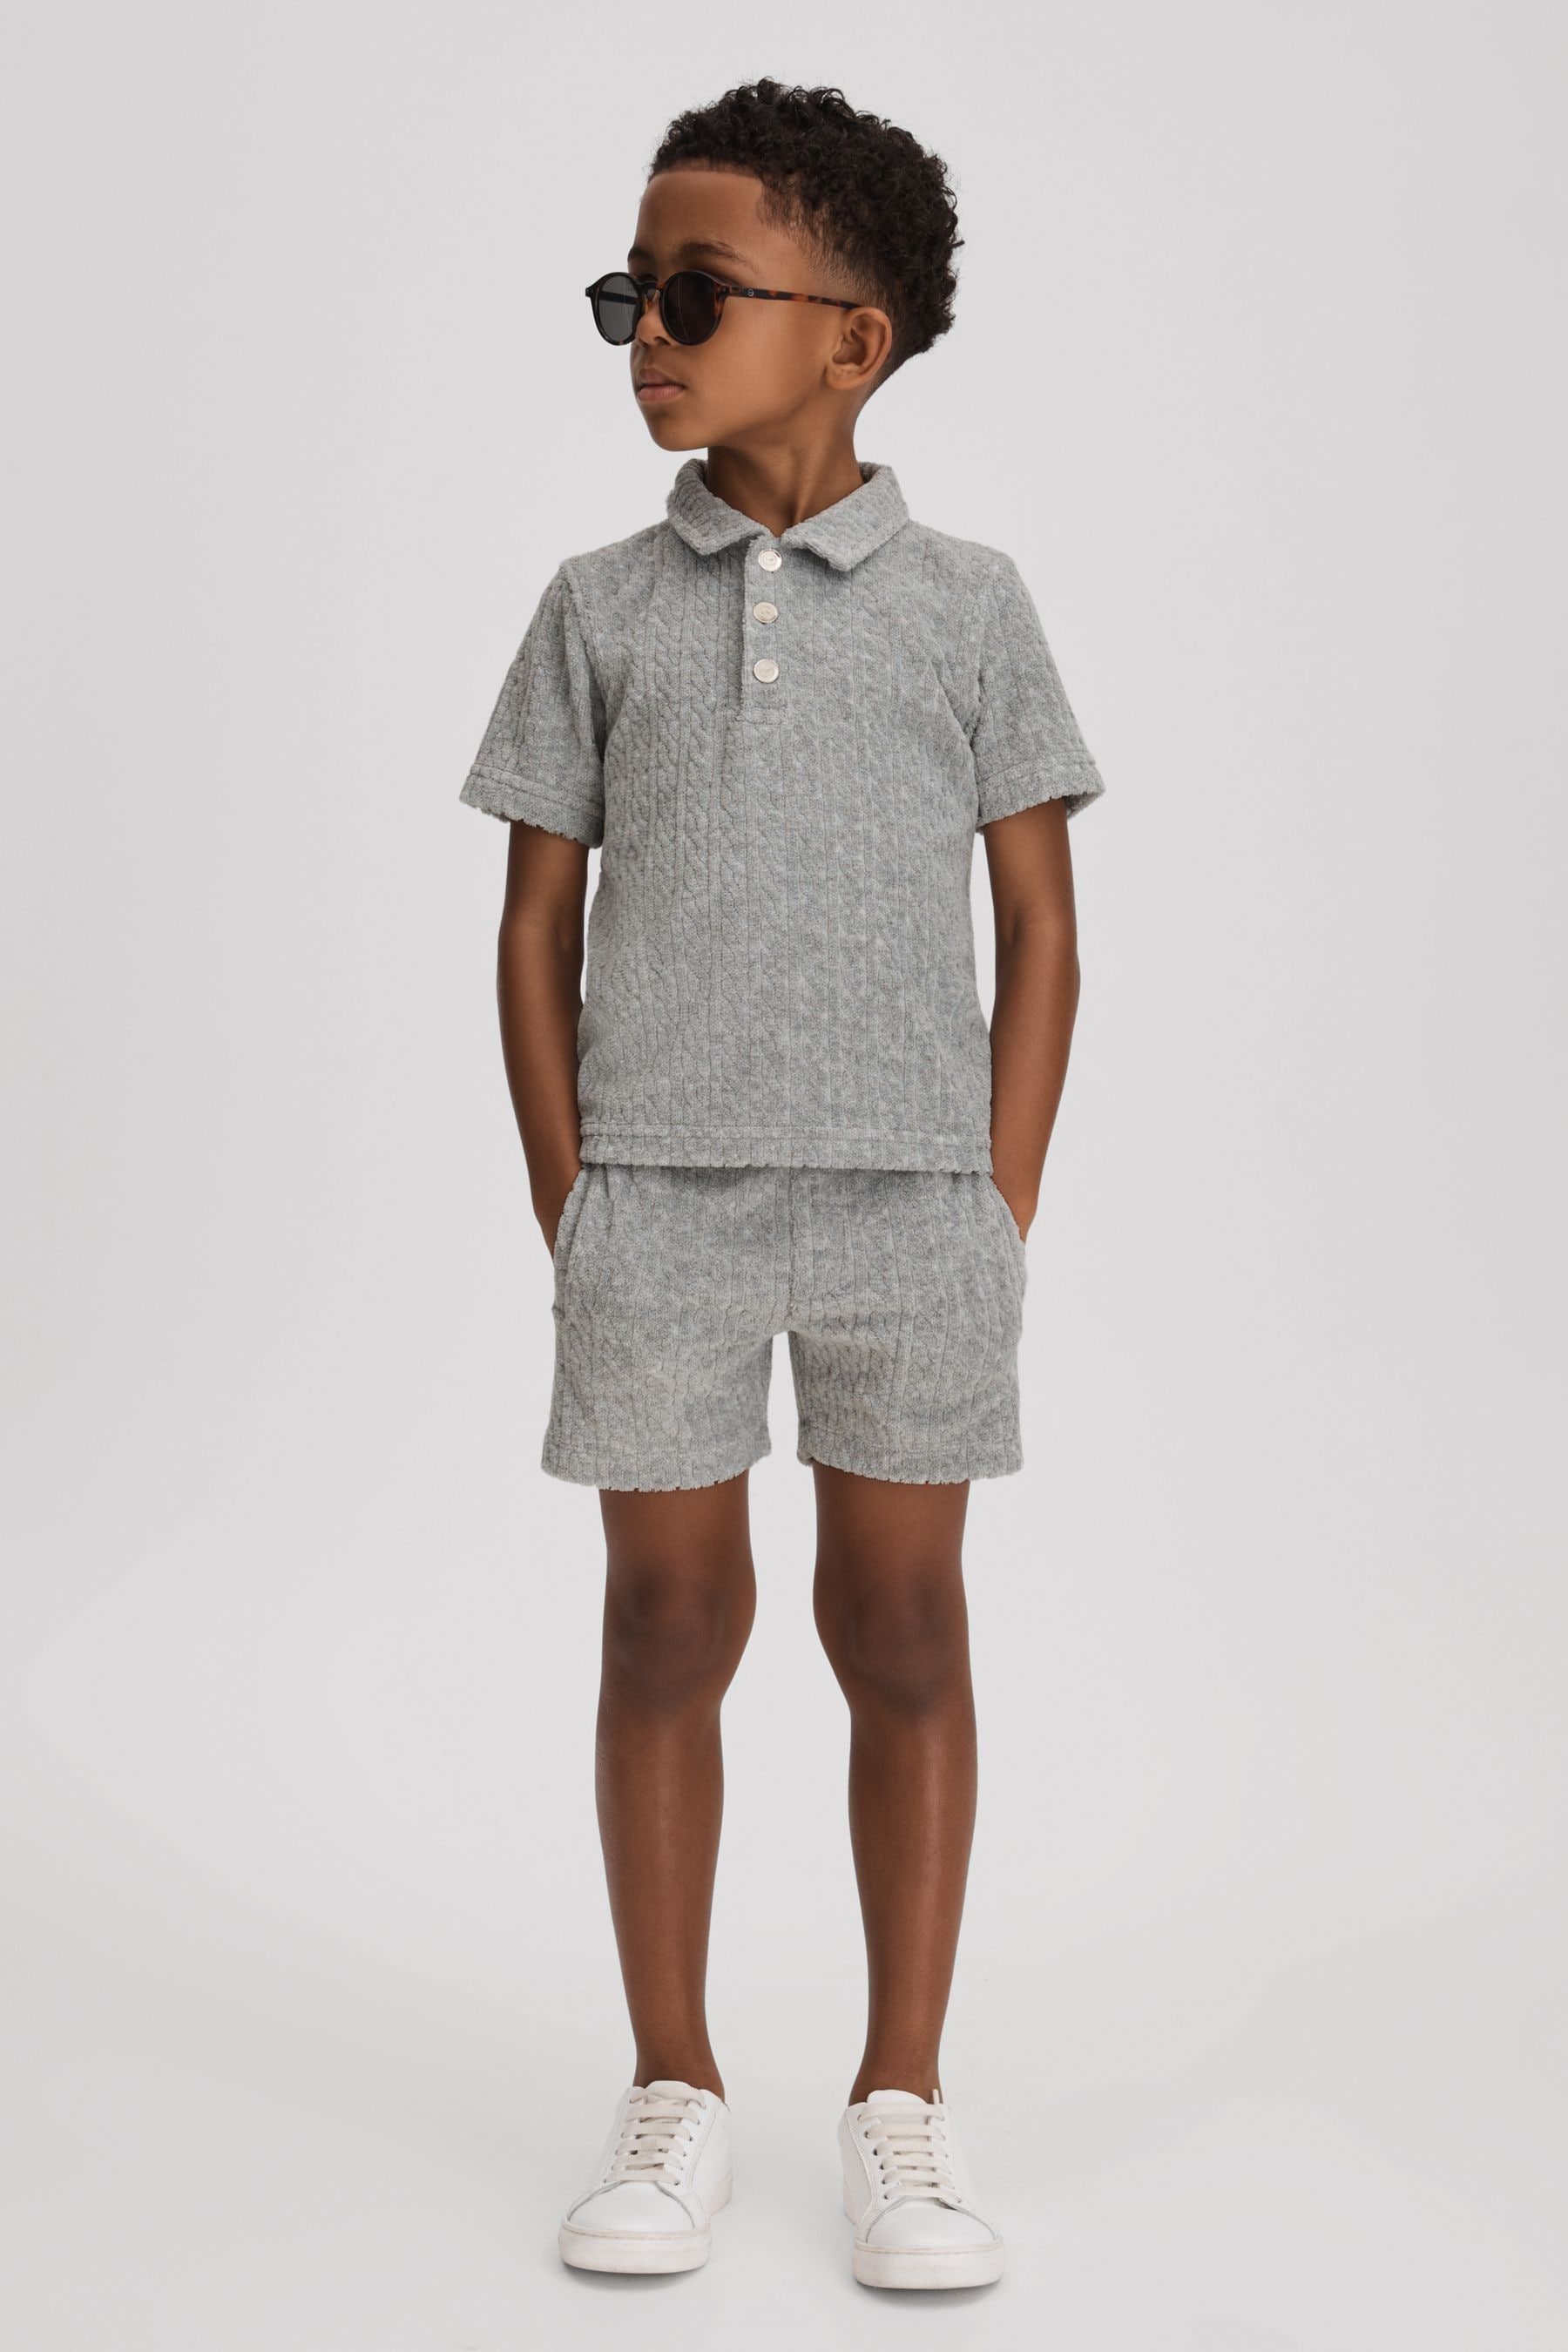 Reiss Kids' Fletcher - Soft Grey Towelling Drawstring Shorts, Age 4-5 Years